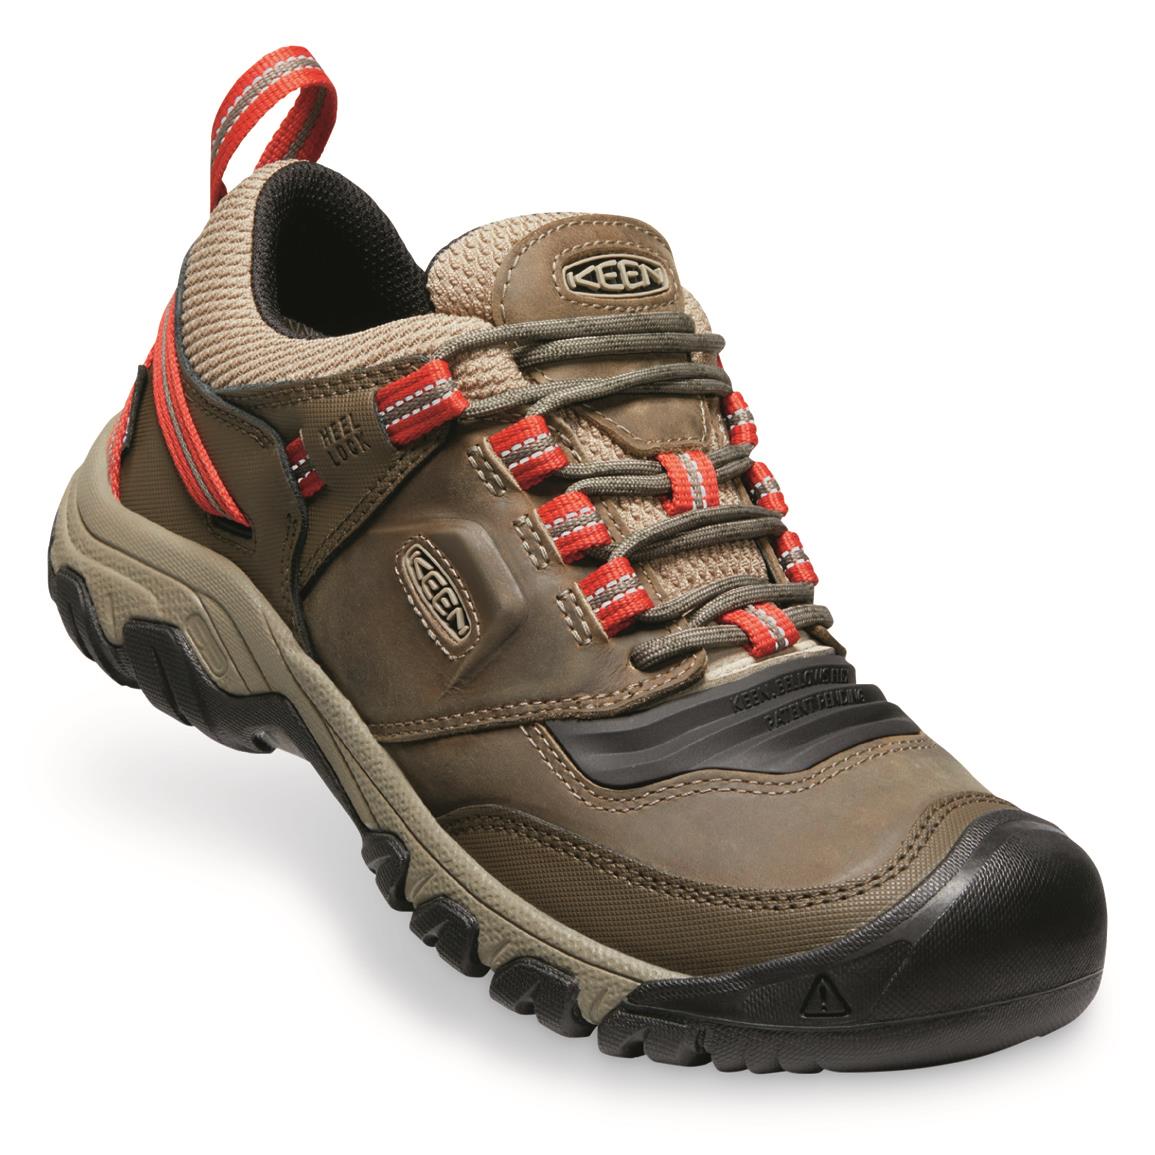 KEEN Men's Ridge Flex Waterproof Hiking Shoes, Timberwolf/ketchup